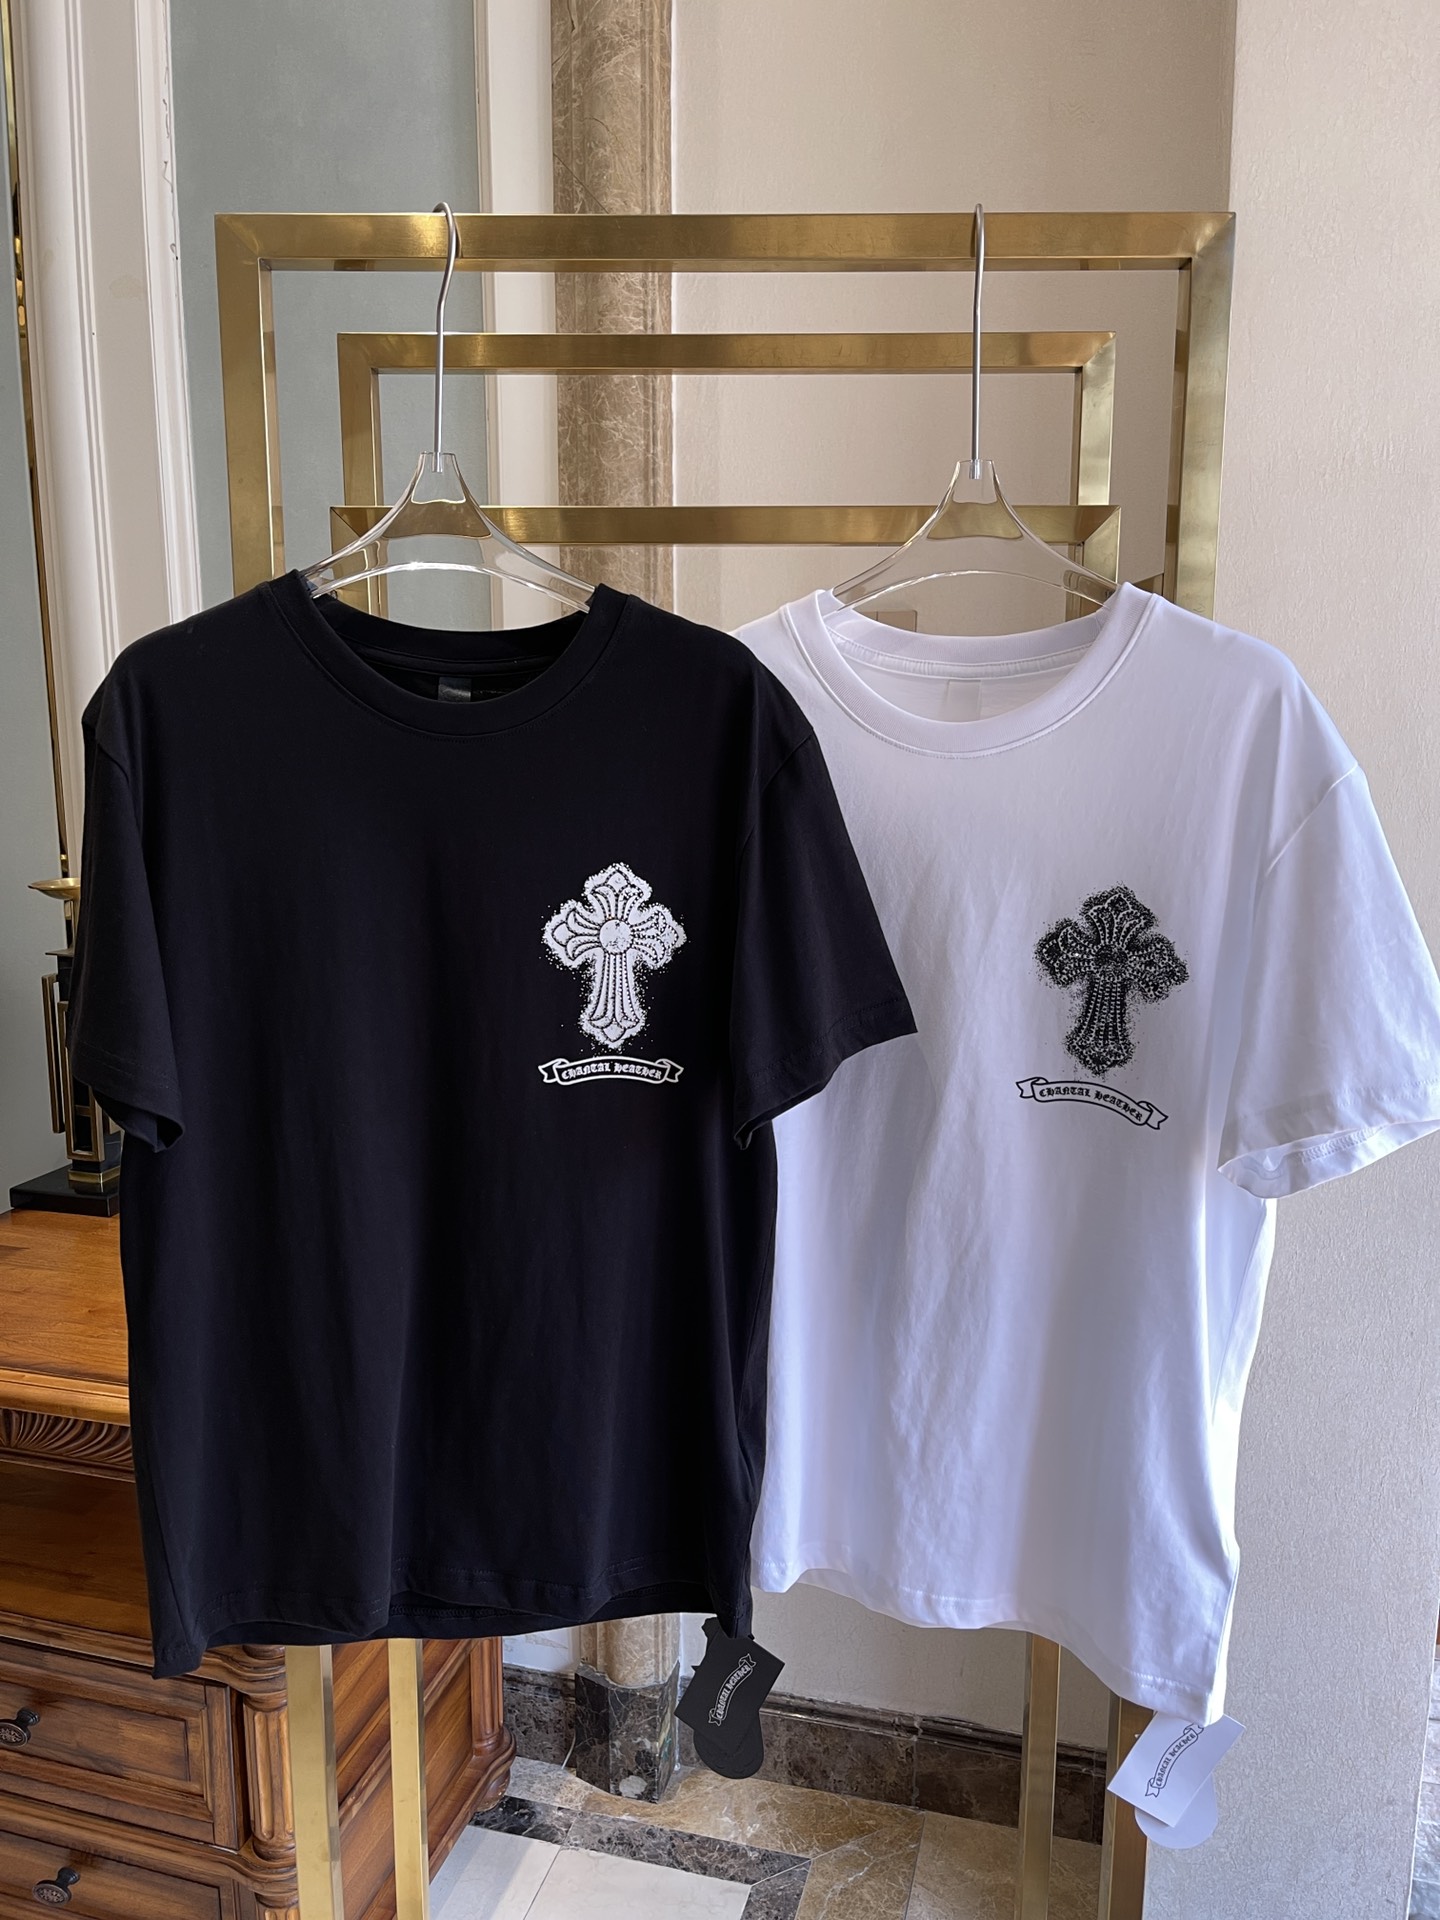 Chrome Hearts 2022 cross fashion T-shirt